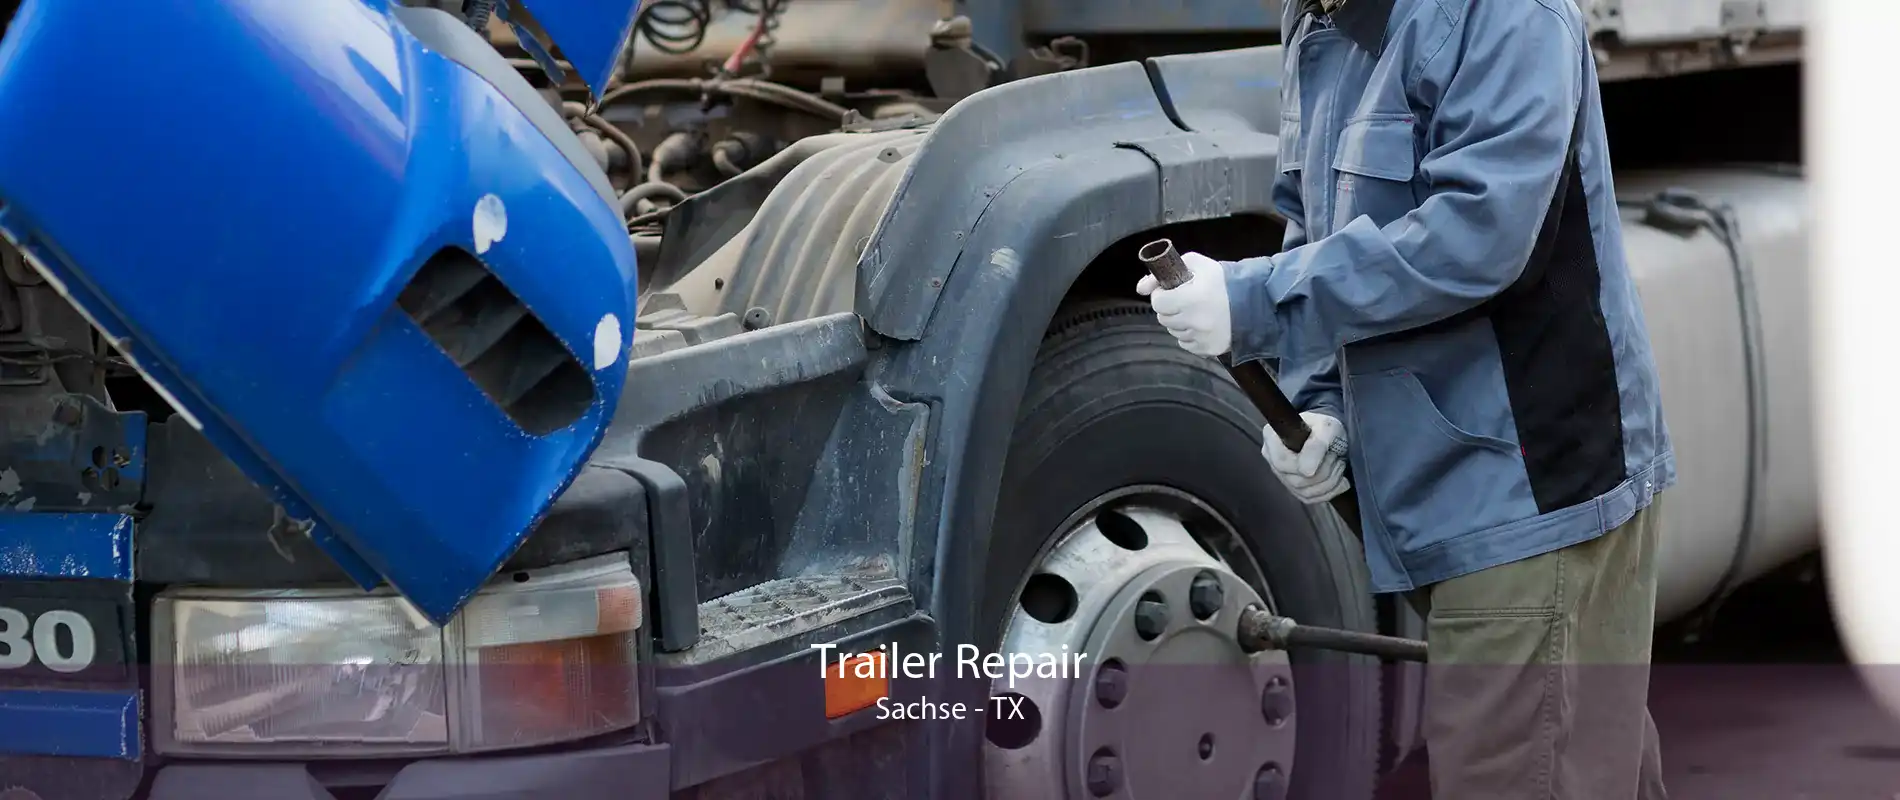 Trailer Repair Sachse - TX